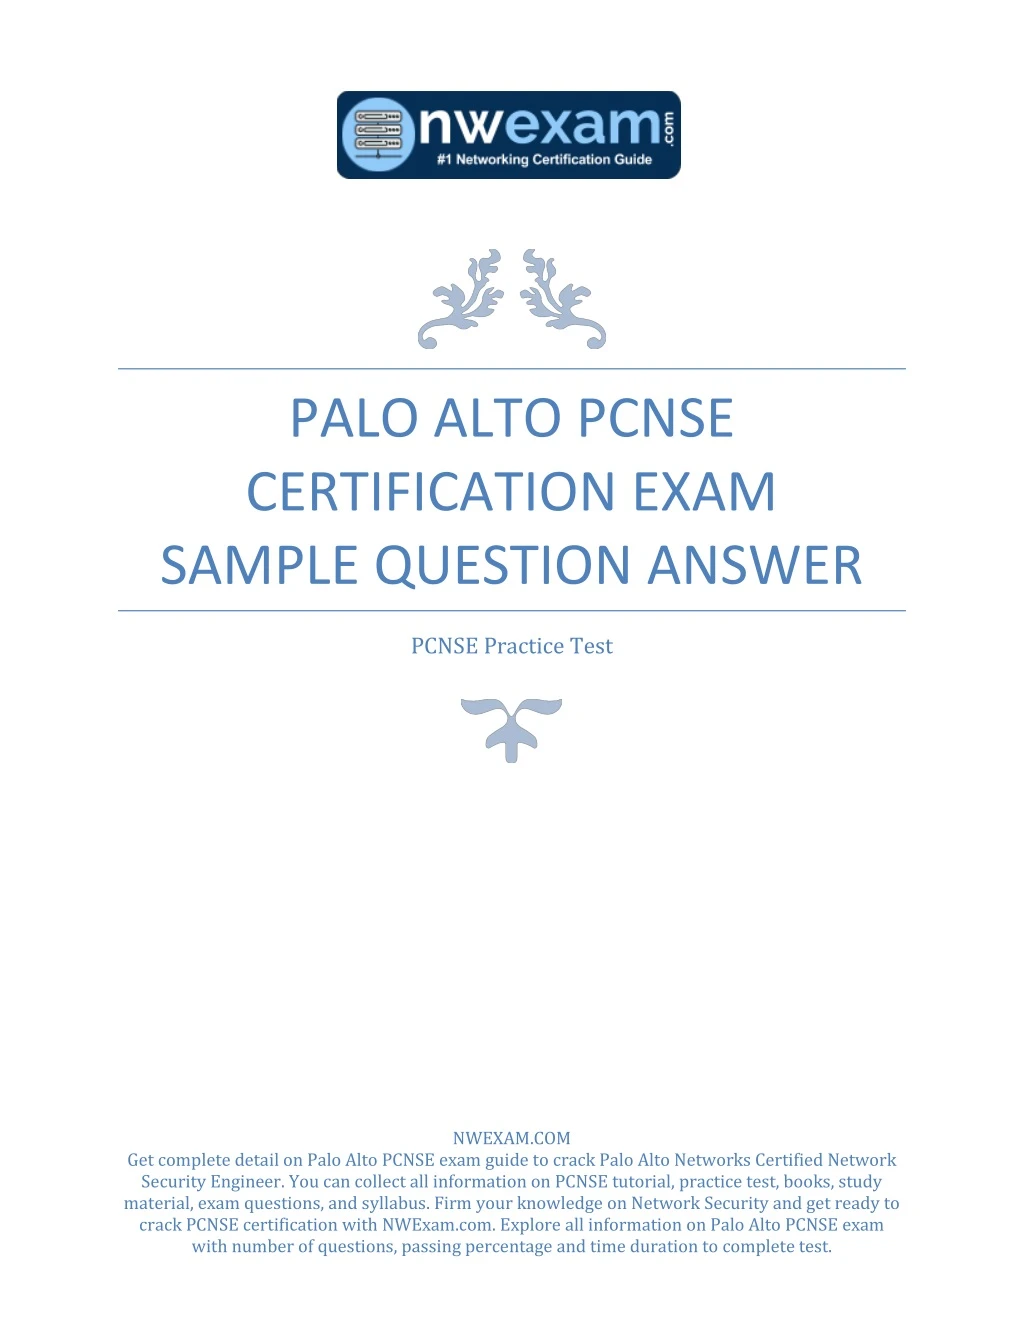 palo alto pcnse certification exam sample